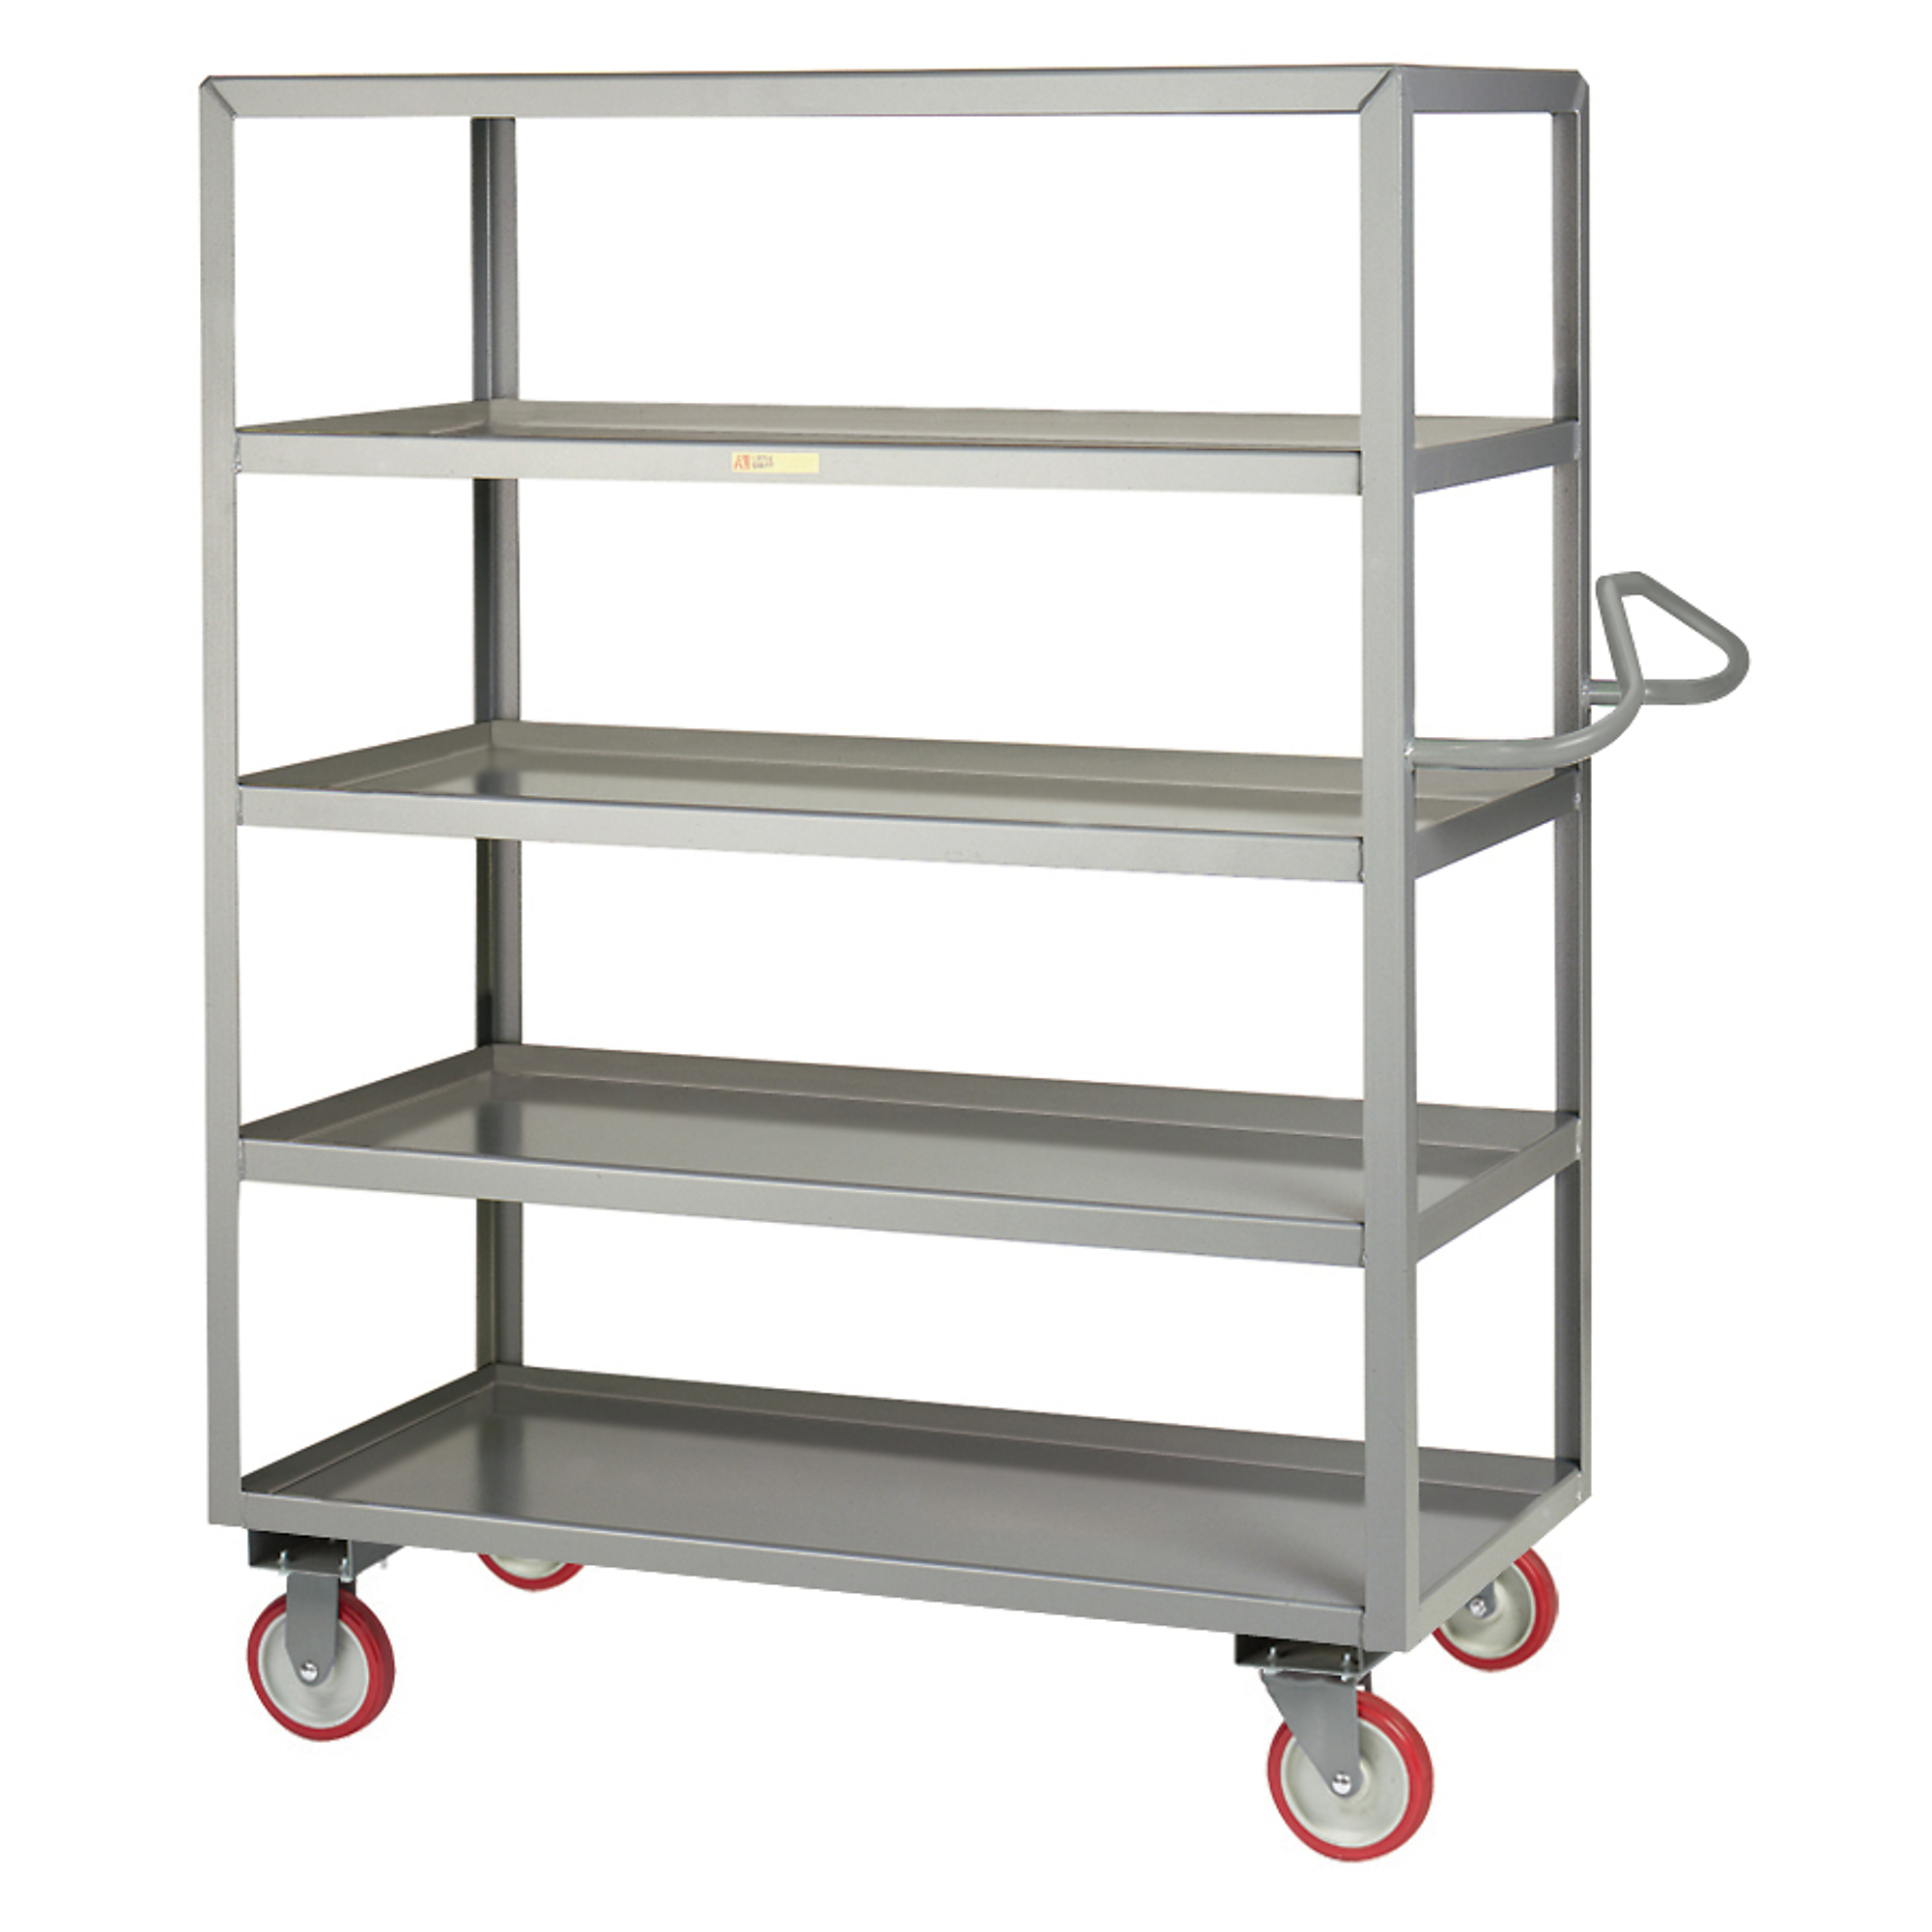 Little Giant, 5-Shelf Service Cart, Ergo Handle, 24x48, 1200 lbs, Total Capacity 1200 lb, Shelves (qty.) 5, Material Carbon Steel, Model 5ENML-2448-